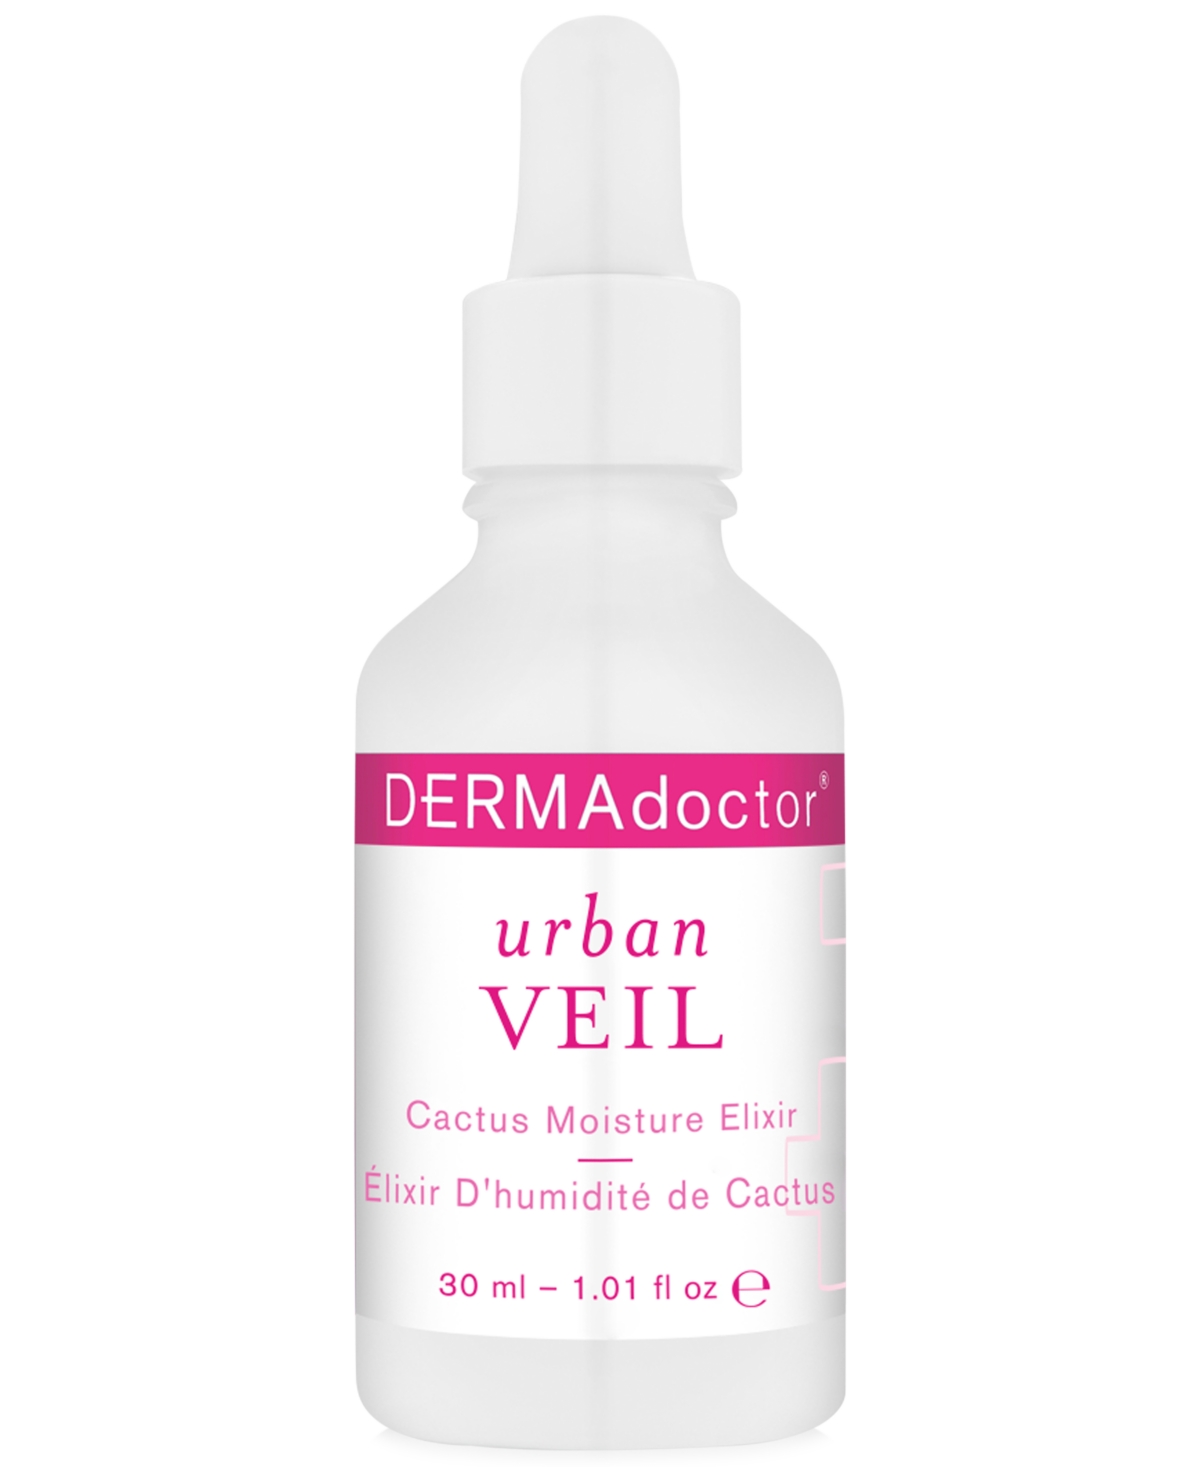 DERMAdoctor Urban Veil Cactus Moisture Elixir, 1.01-oz.